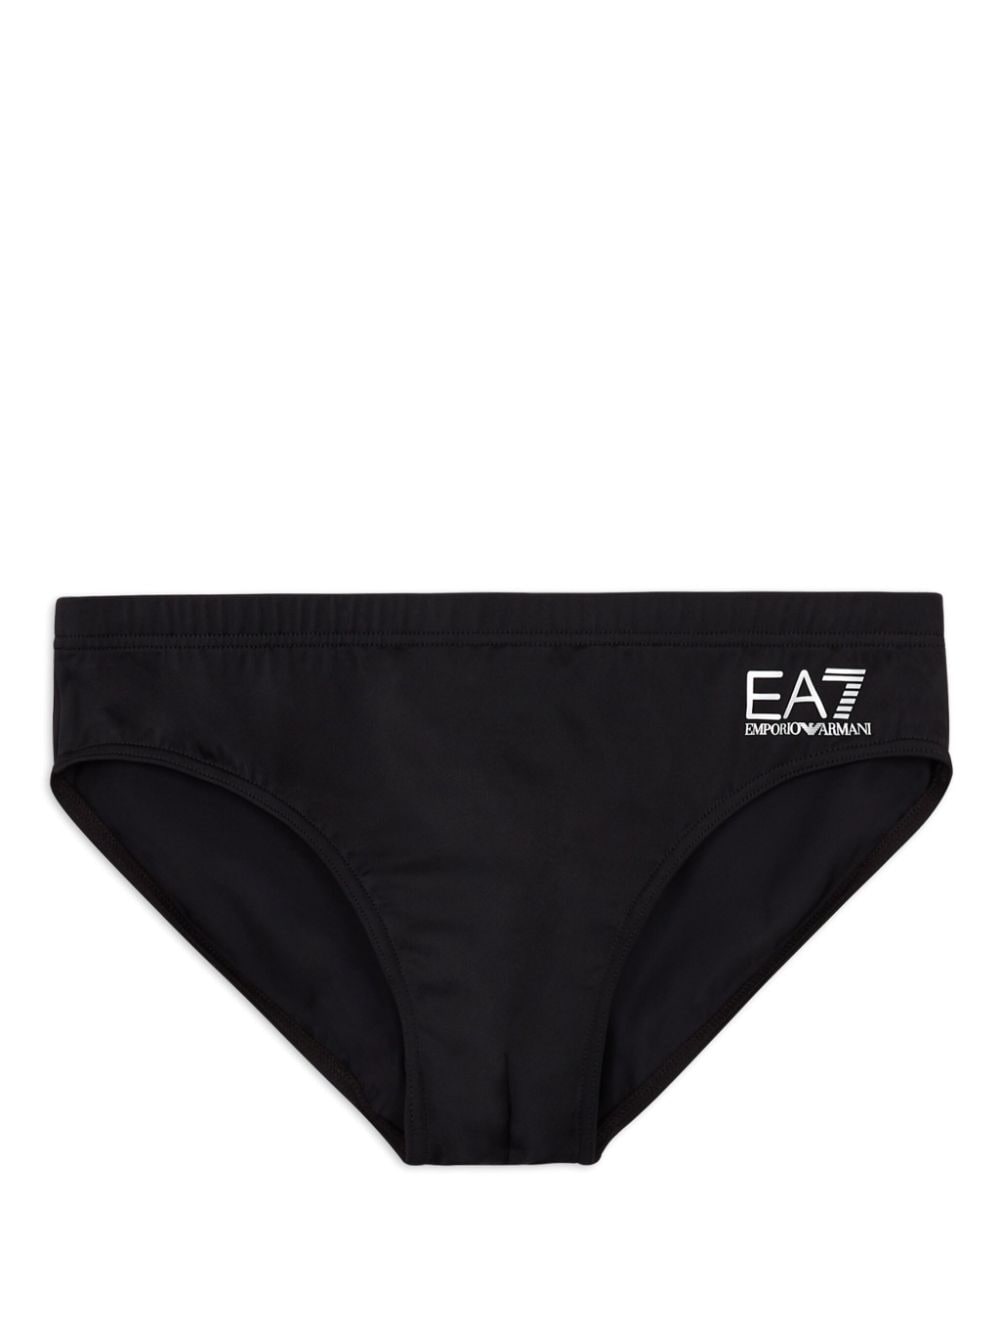 Ea7 Emporio Armani EA7 zwembroek met logoprint Zwart